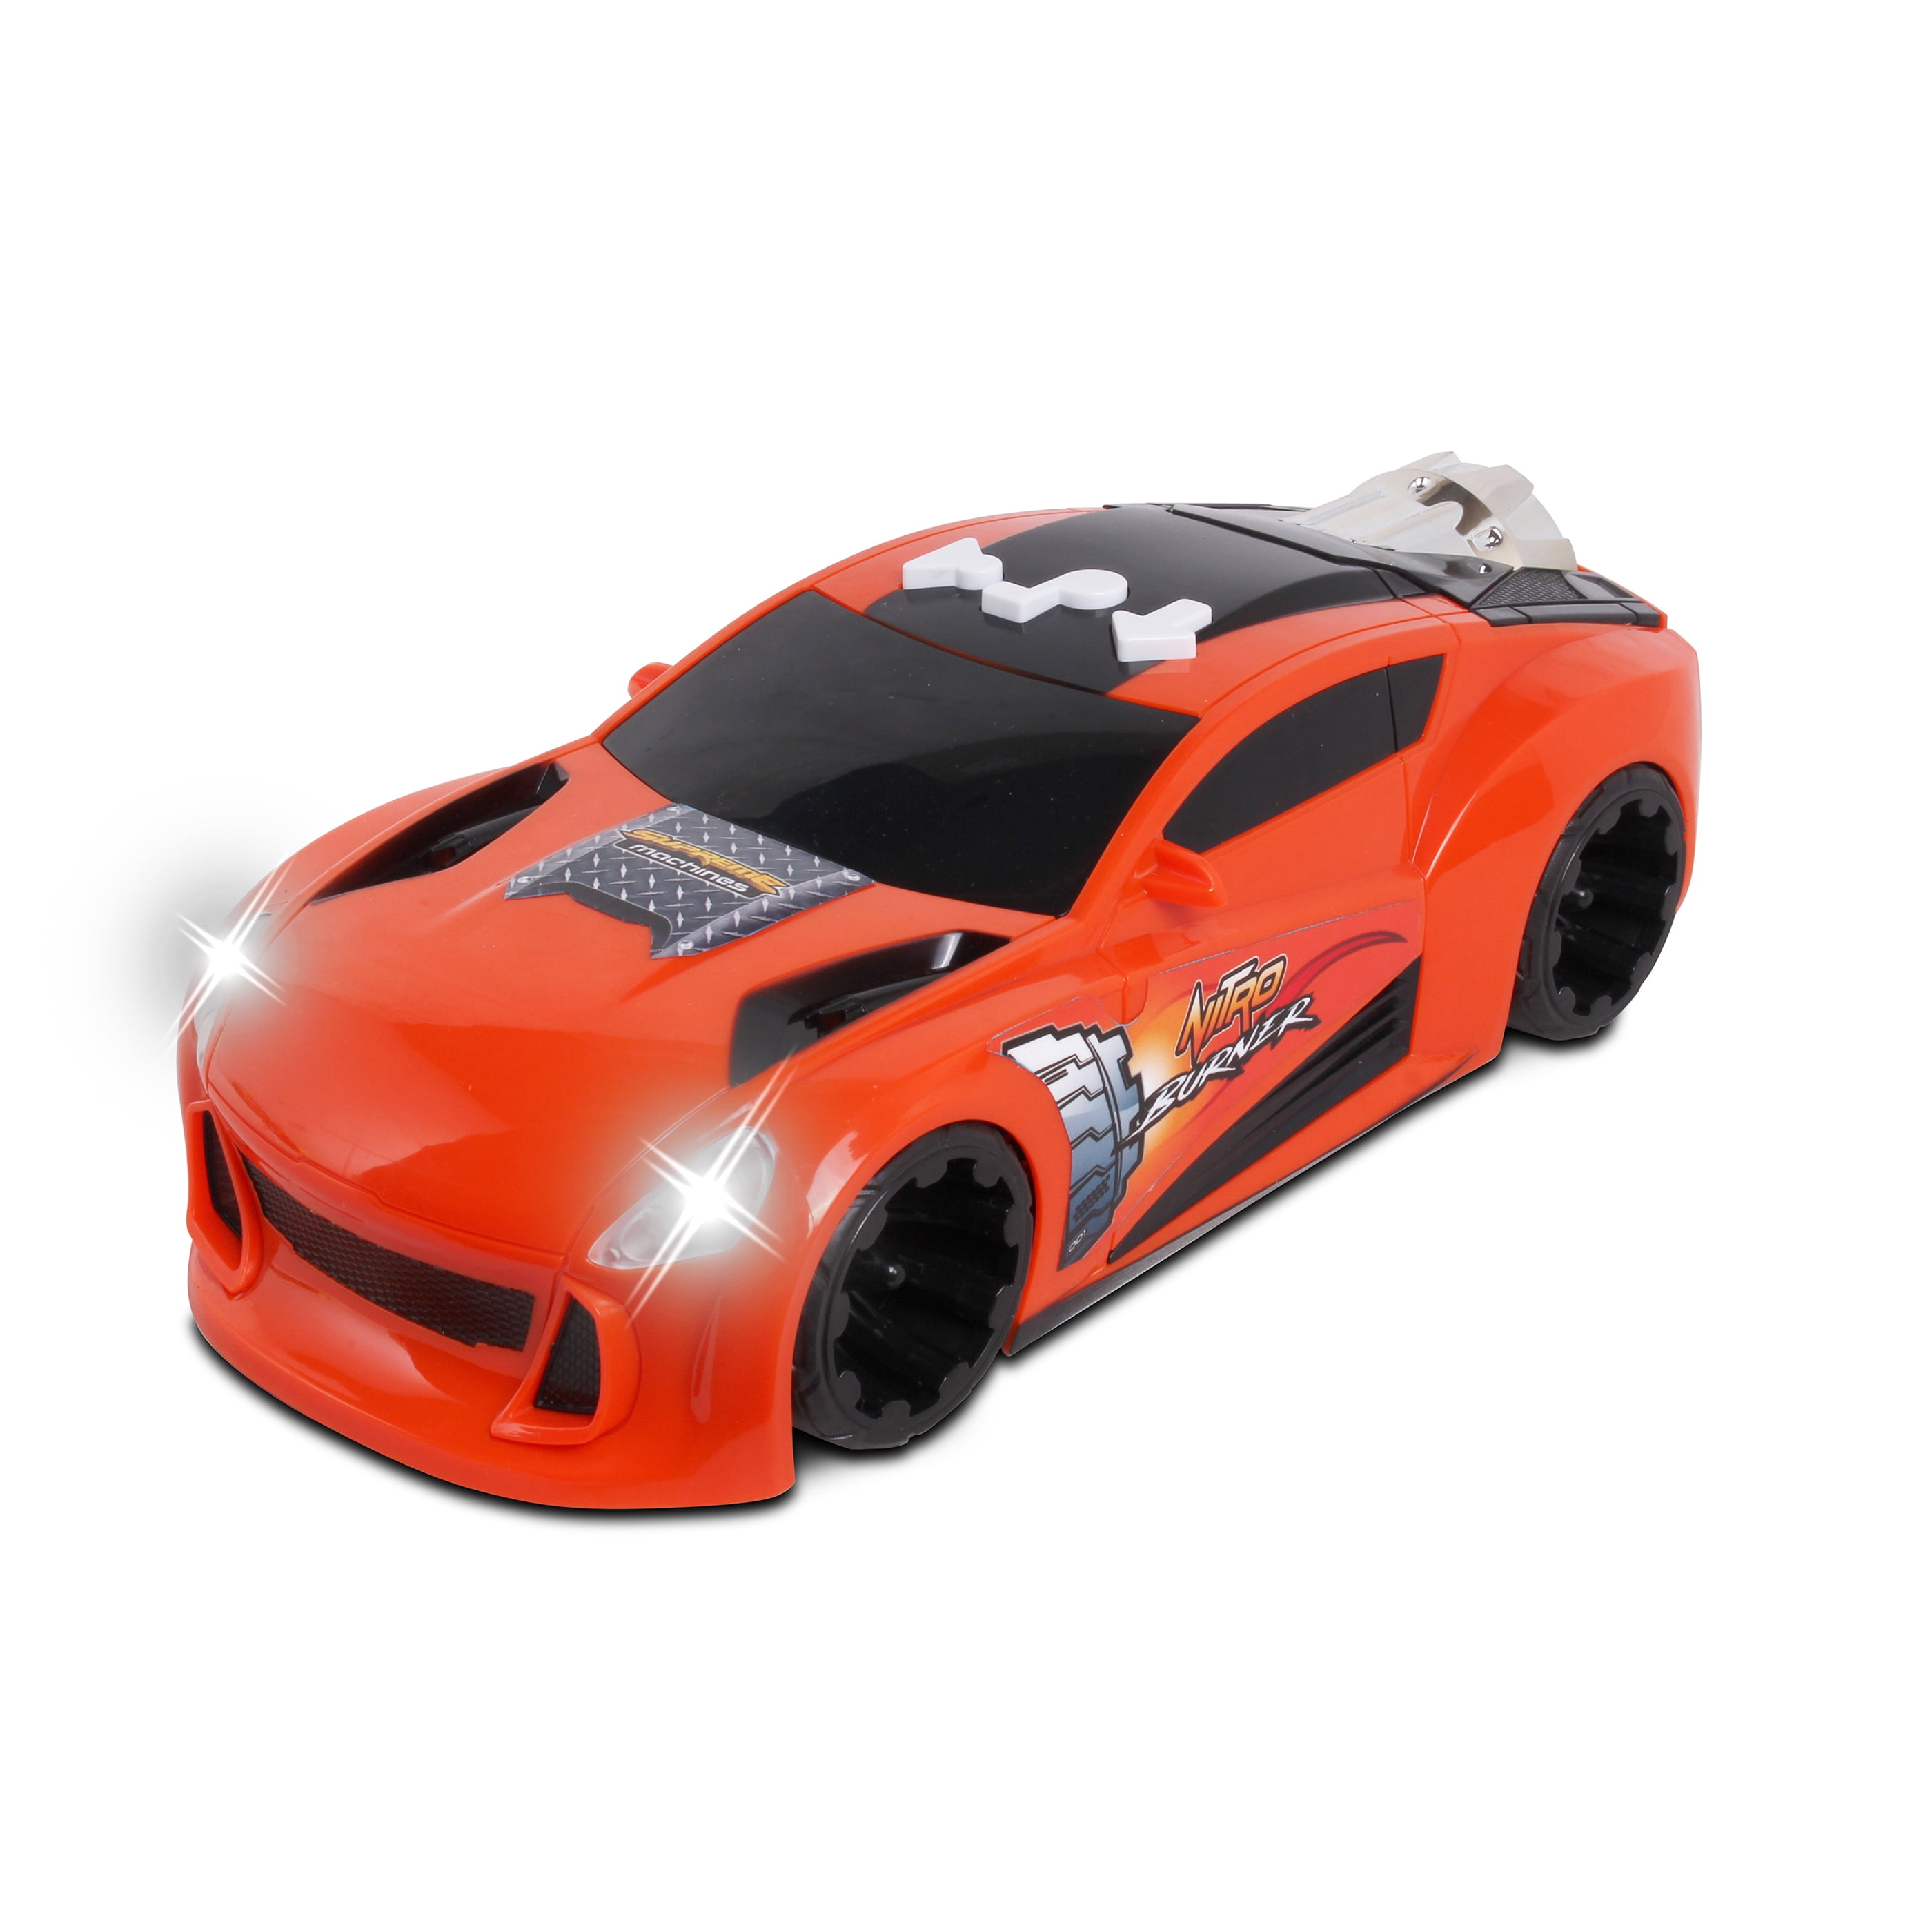 Nkok Supreme Machines Nitro Burner Toy Race Car Walmart Com Walmart Com